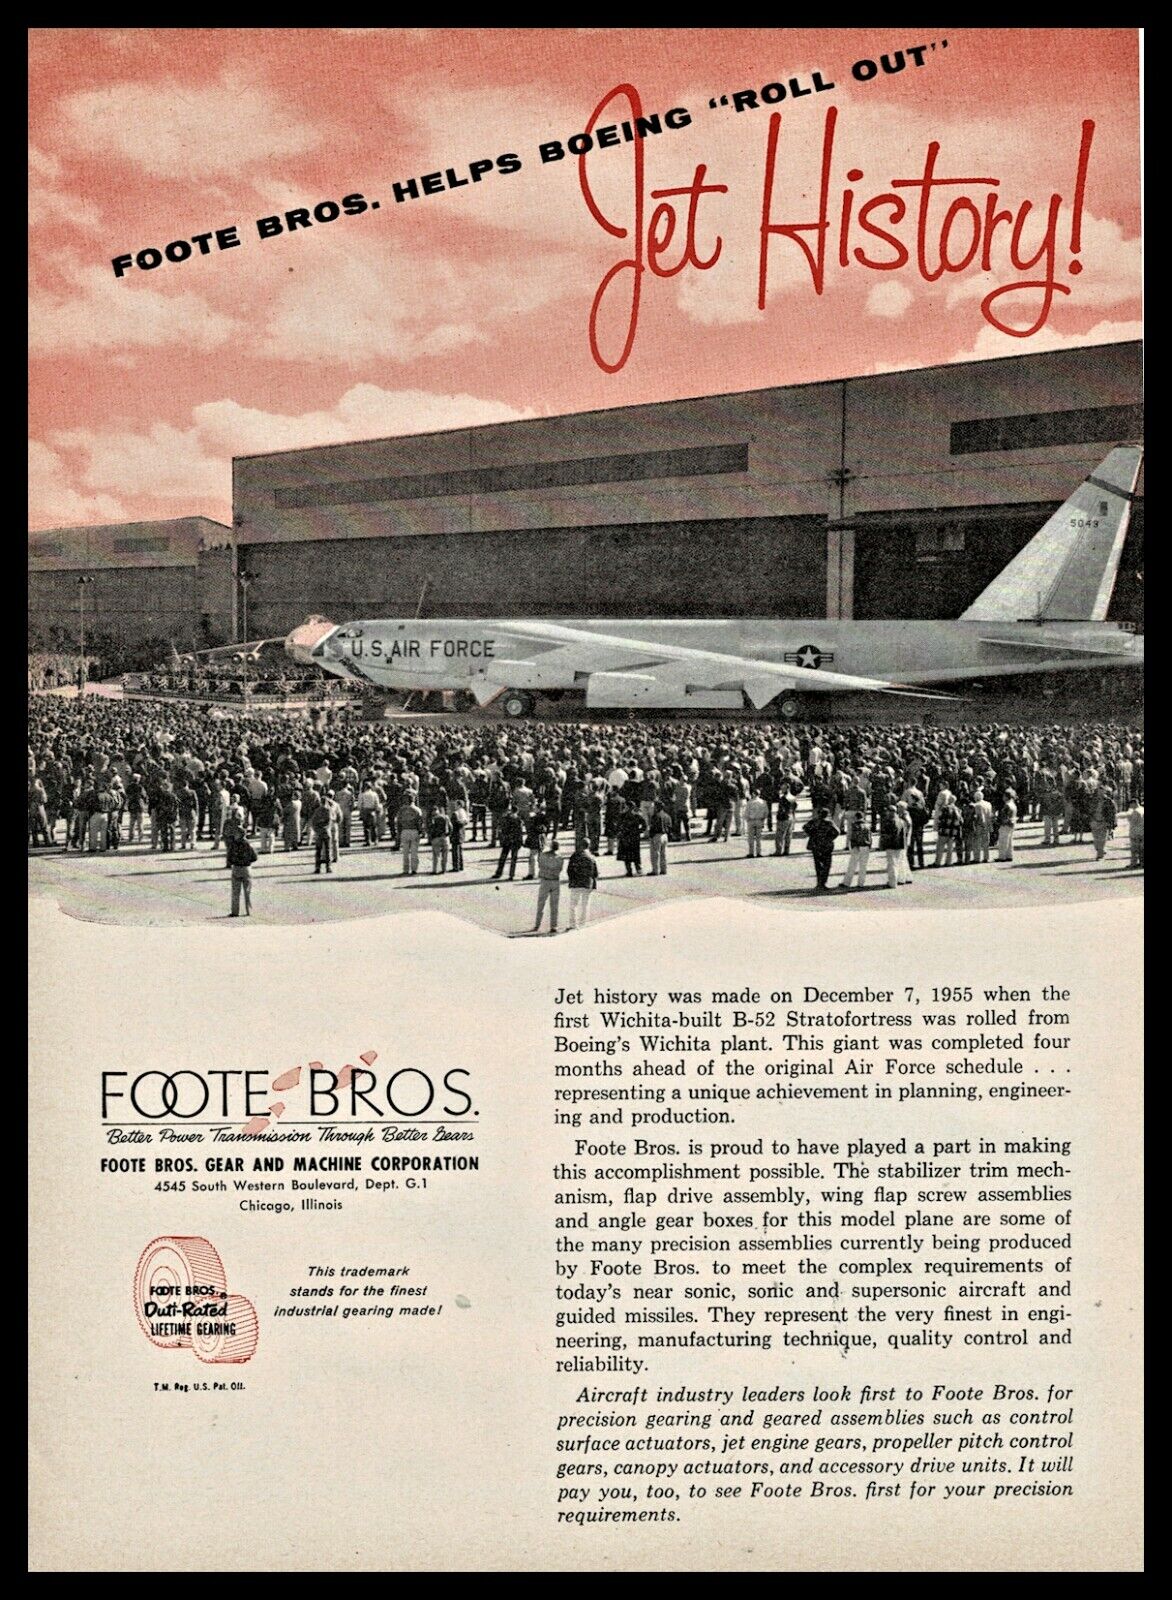 1956 BOEING WICHITA Plant 1955 Photo 1st Wichita built B-47 Foote Bros. AD